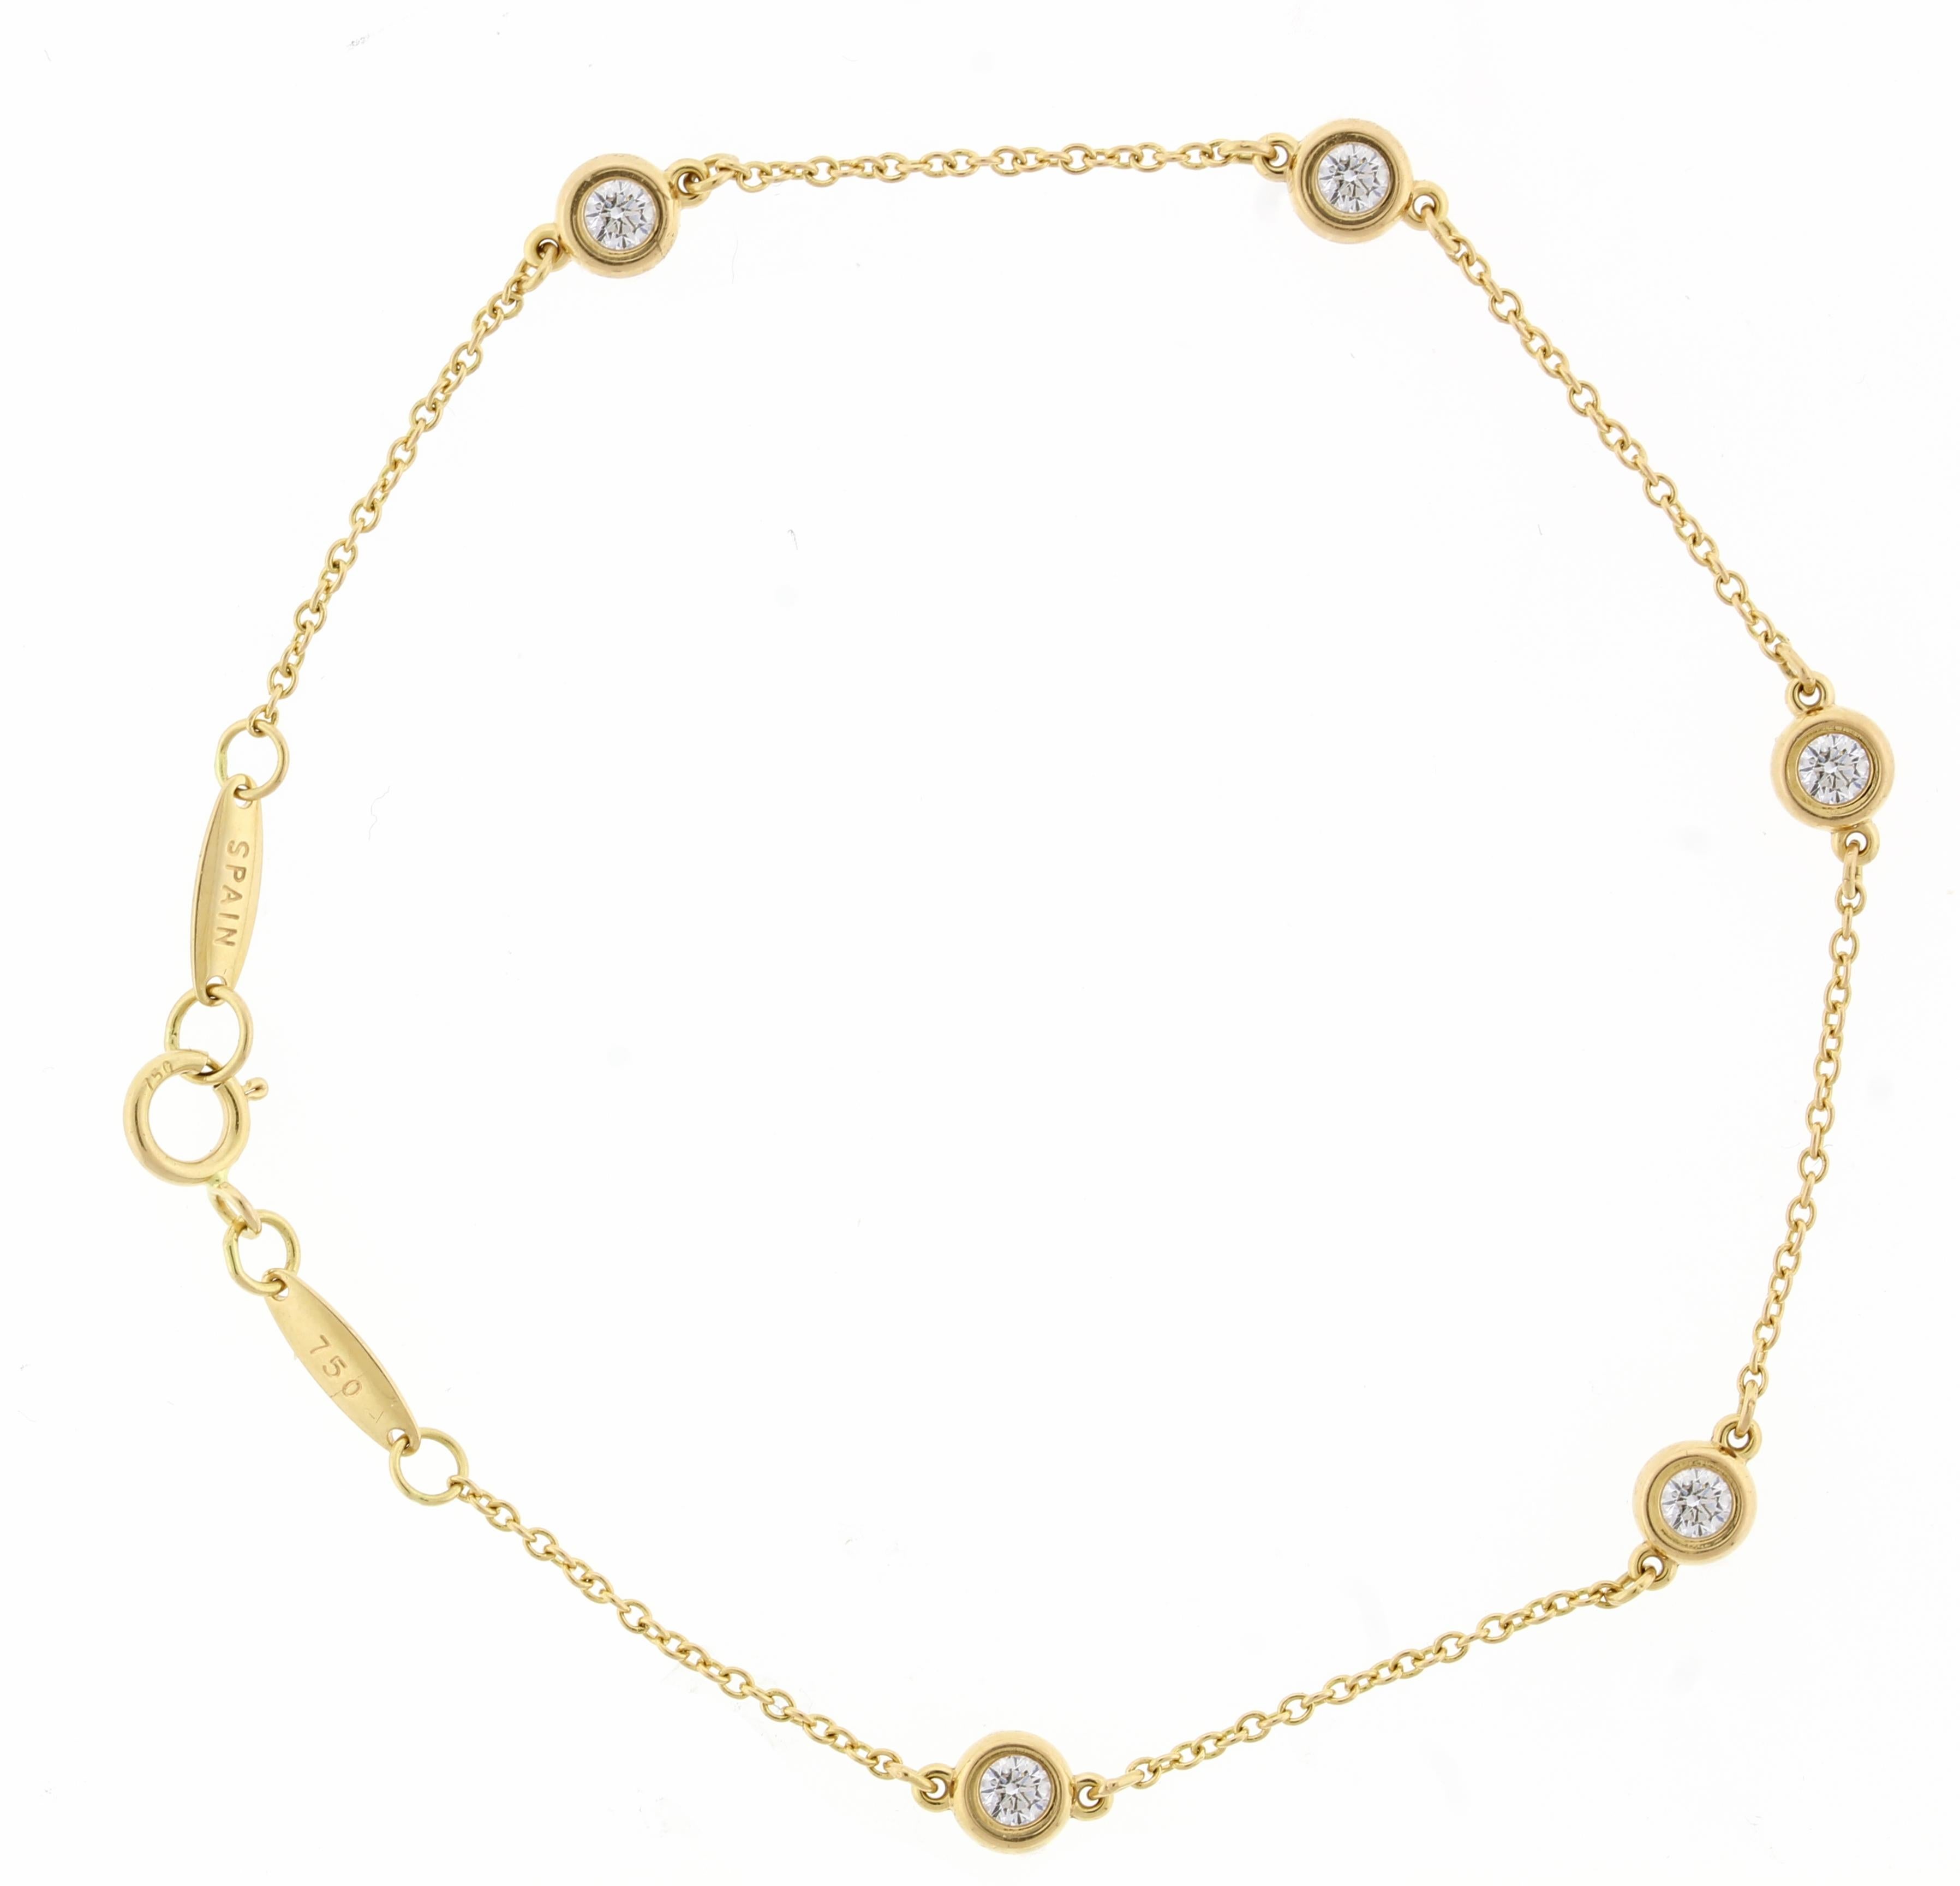 Tiffany & Co. round diamonds catch the light and make it dance. Elsa Peretti bracelet in 18k rose gold with five round brilliant diamonds. 7